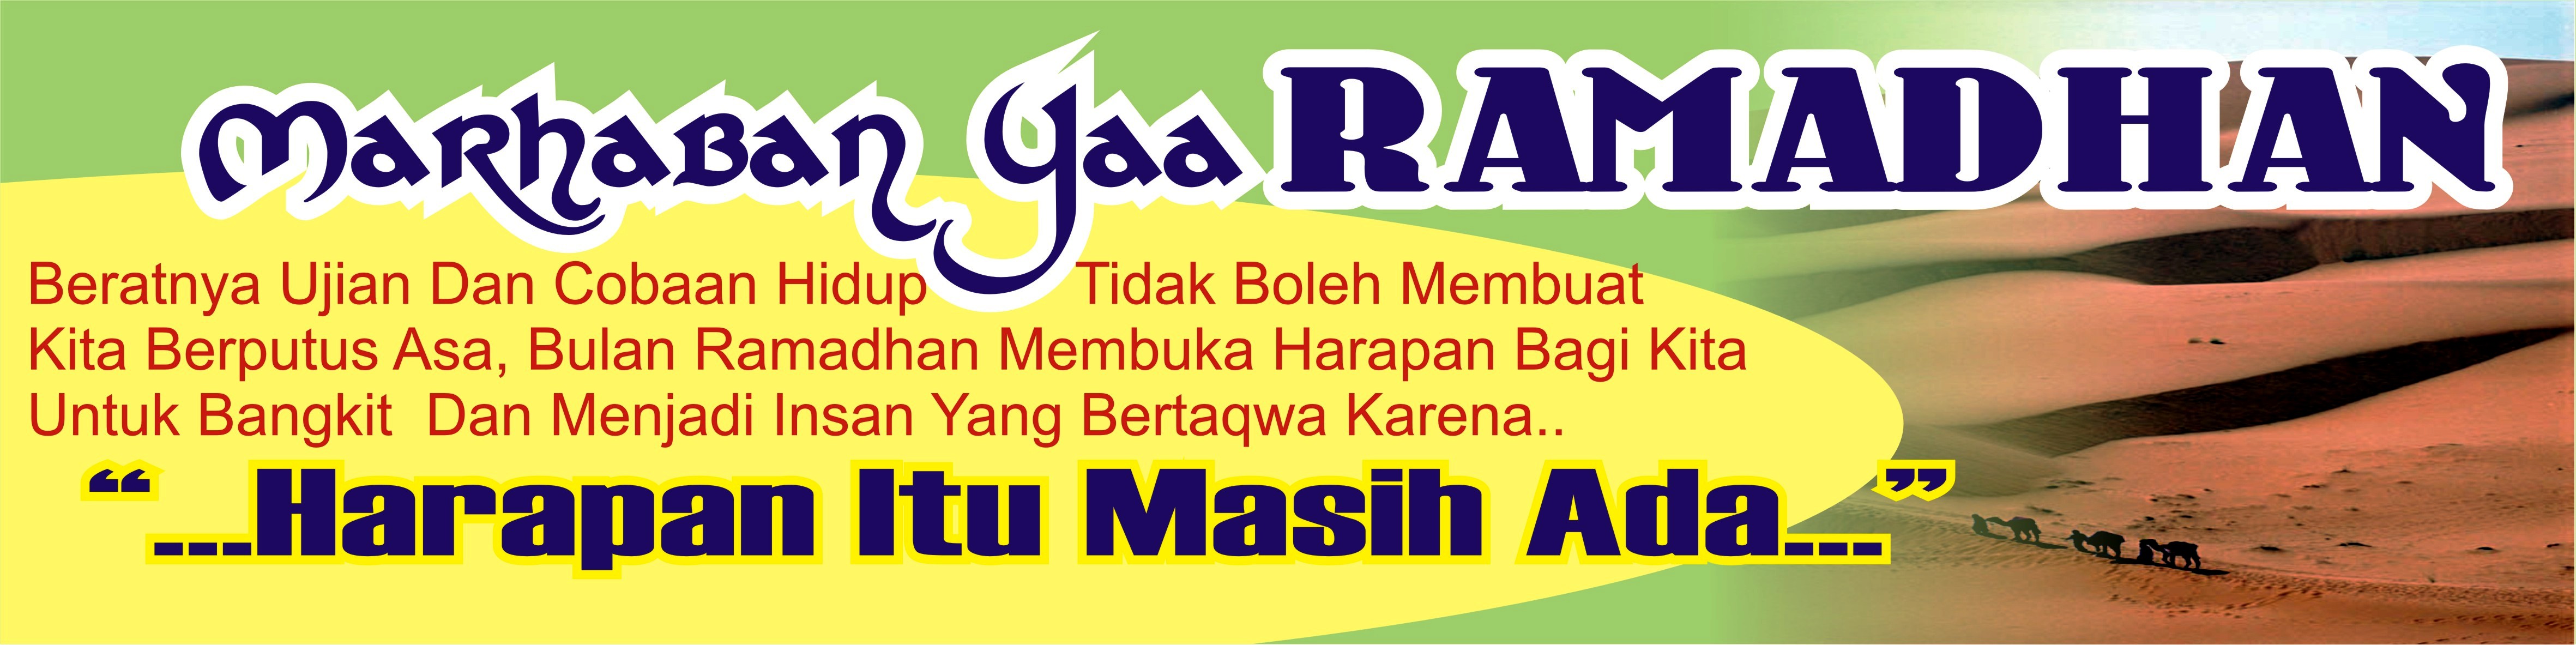 SMS Untuk Menyambut Bulan Suci Ramadhan 1434H 2013 BiellSoft